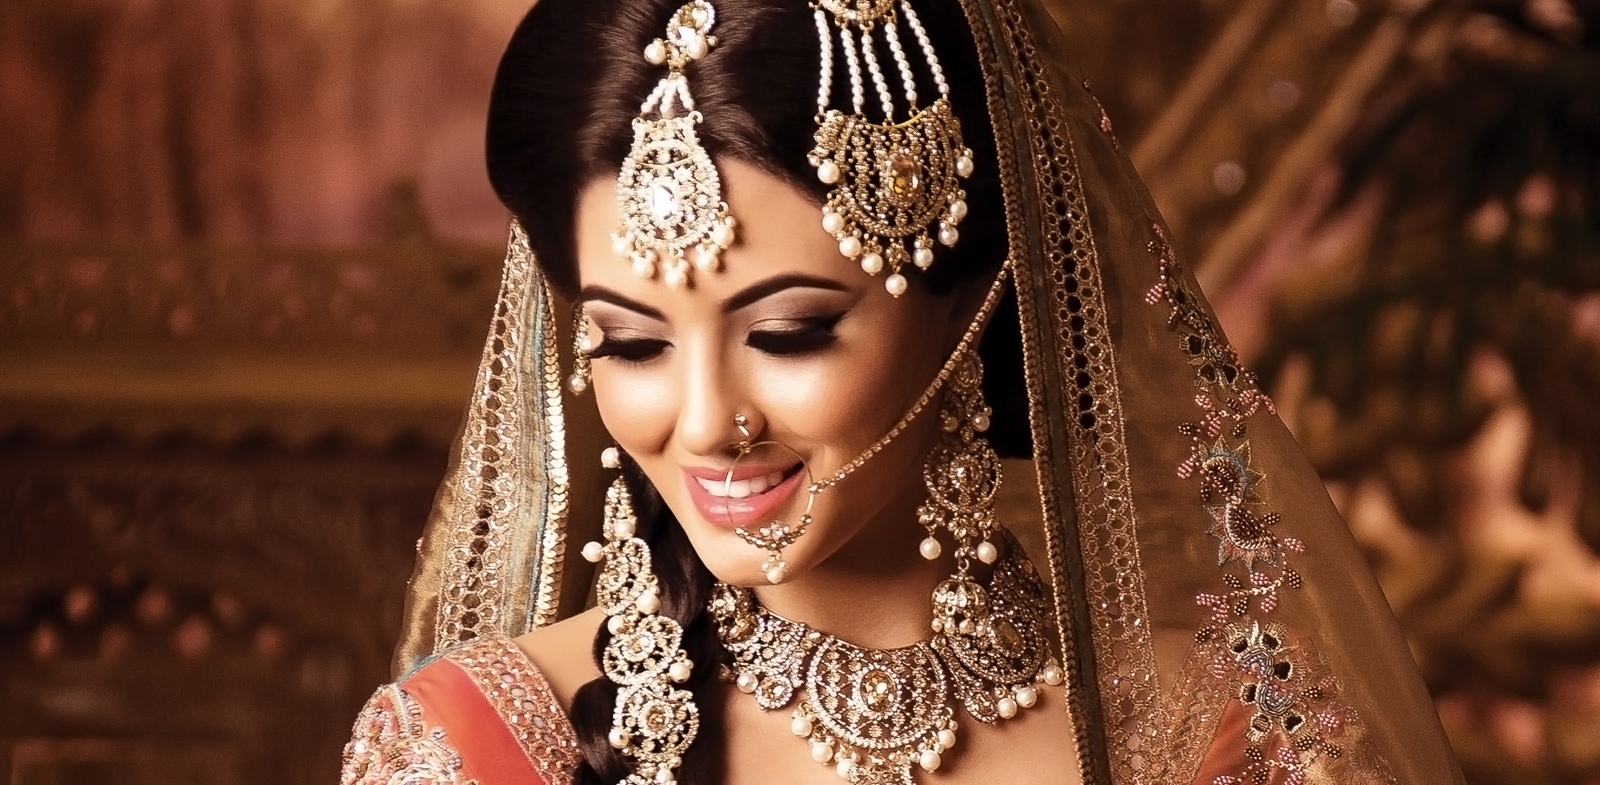 Meenu Bridal - Bridal Makeup In Toronto - Makeup Artist In throughout Indian Wedding Hair And Makeup Artist